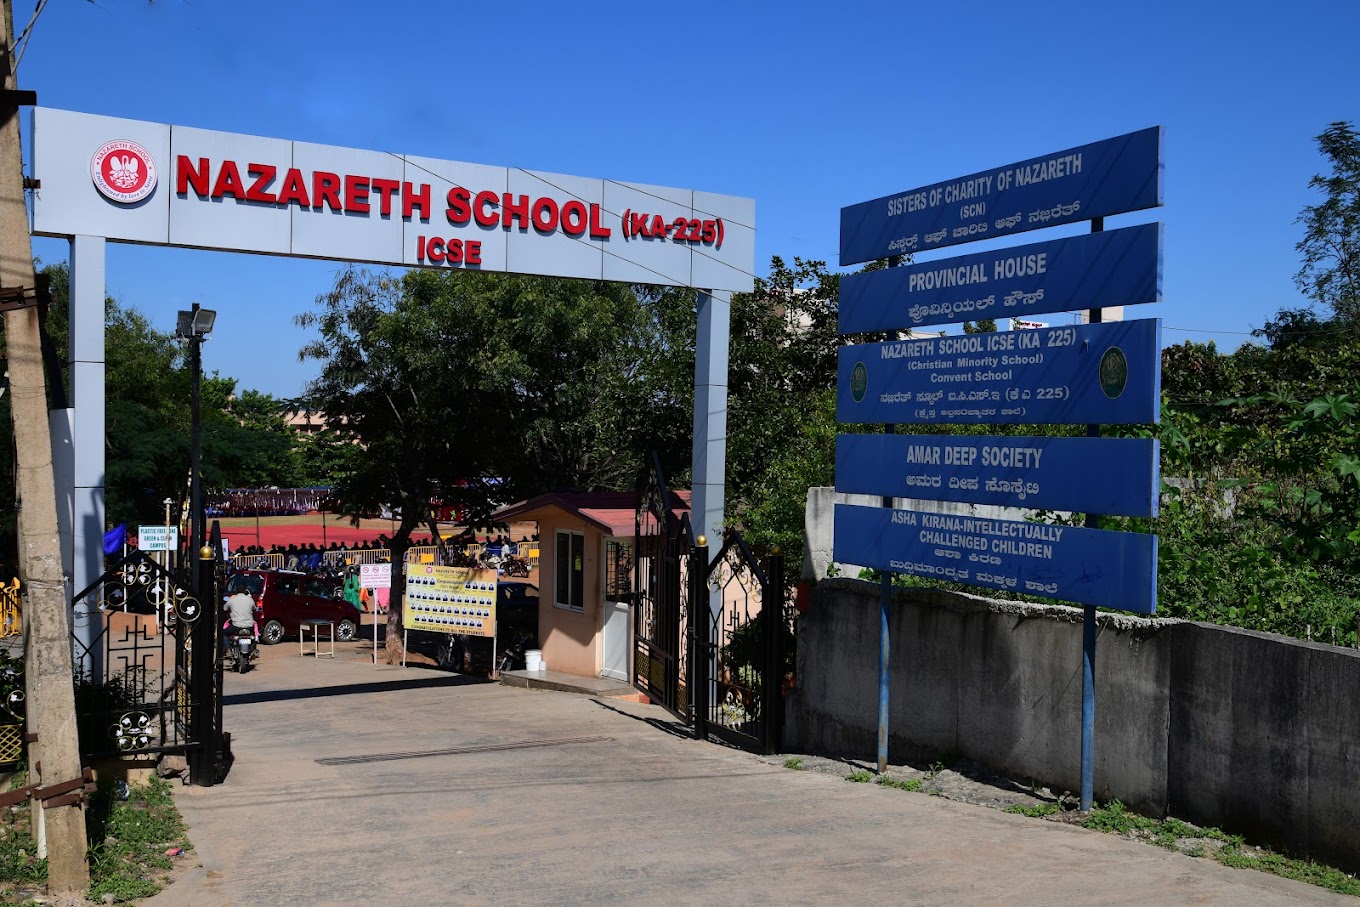 Nazareth school